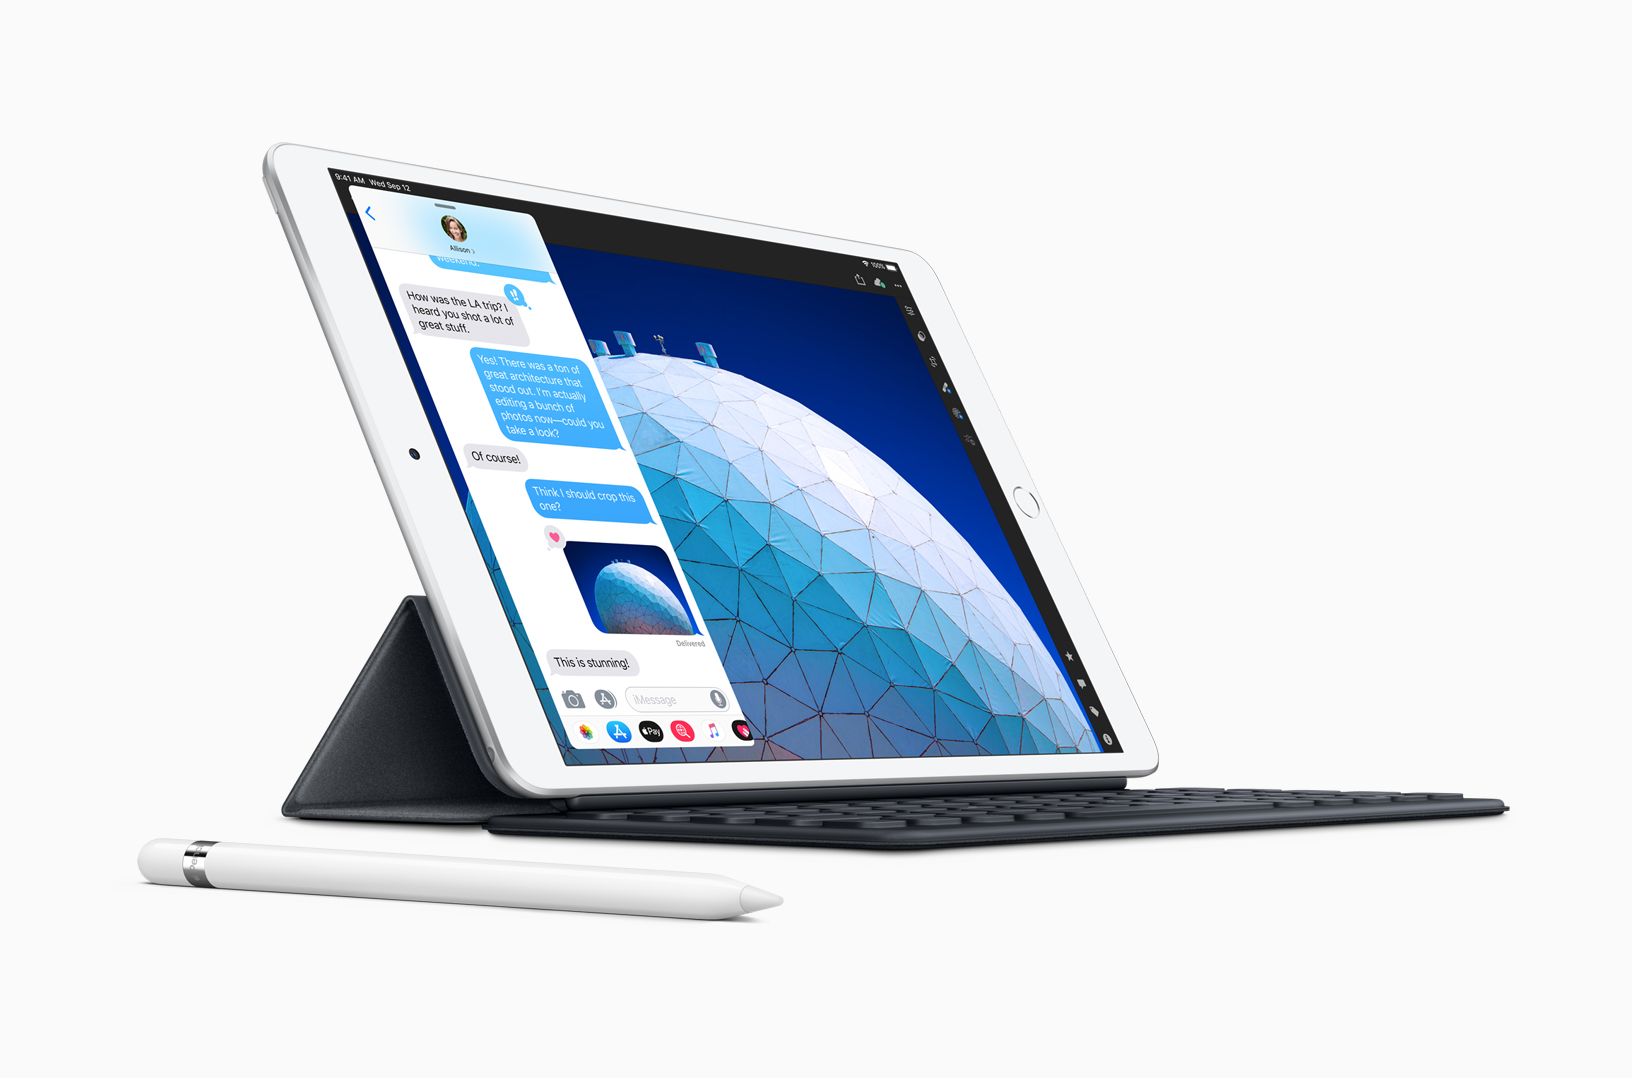 Apple представила новые iPad Air и iPad mini